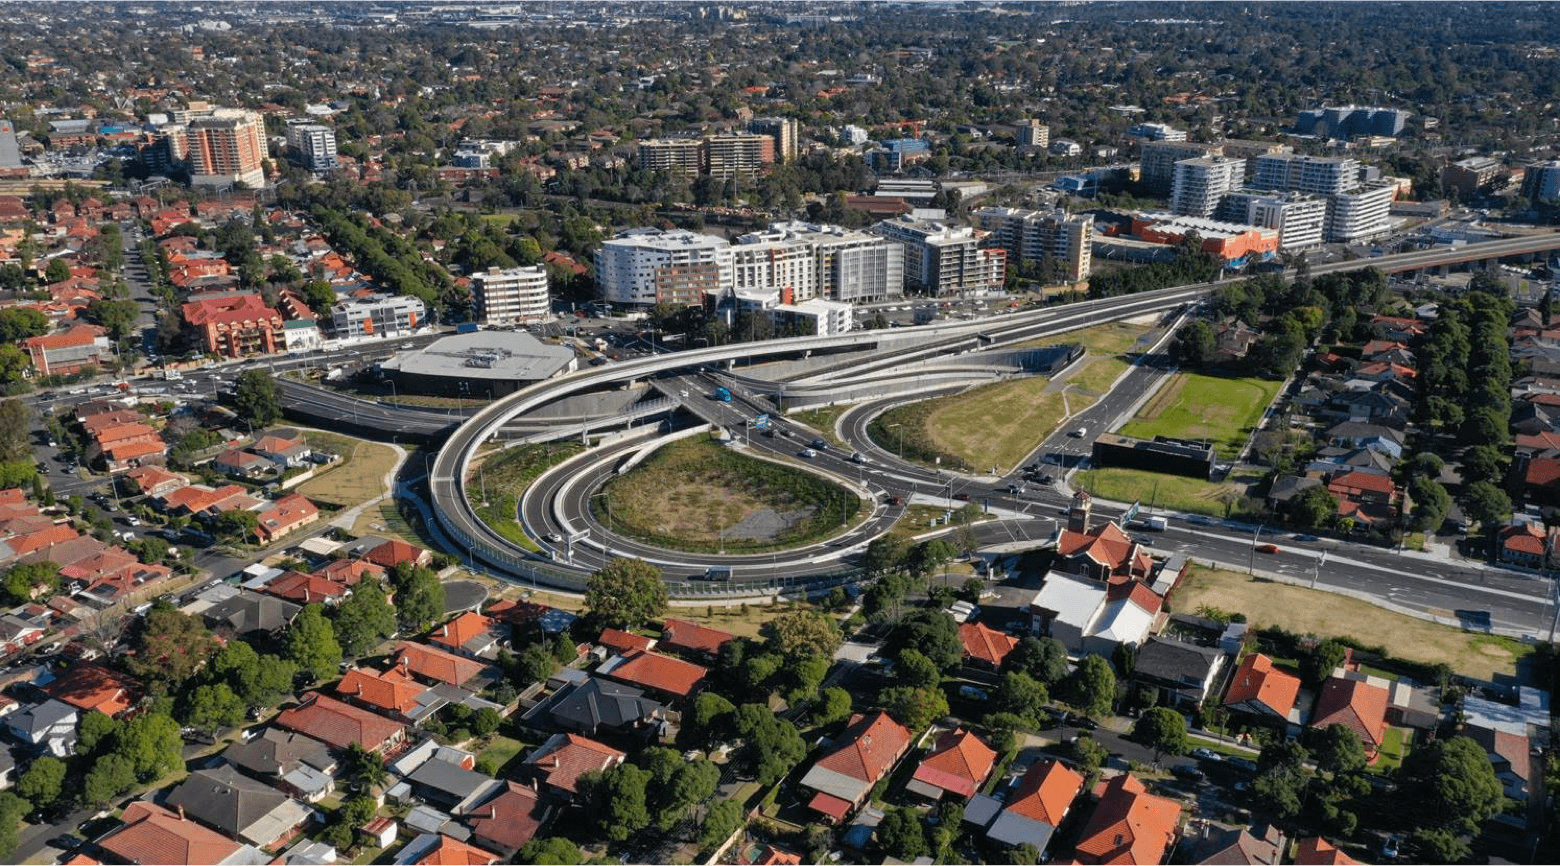 WestConnex: A major infrastructure project in Sydney, Australia